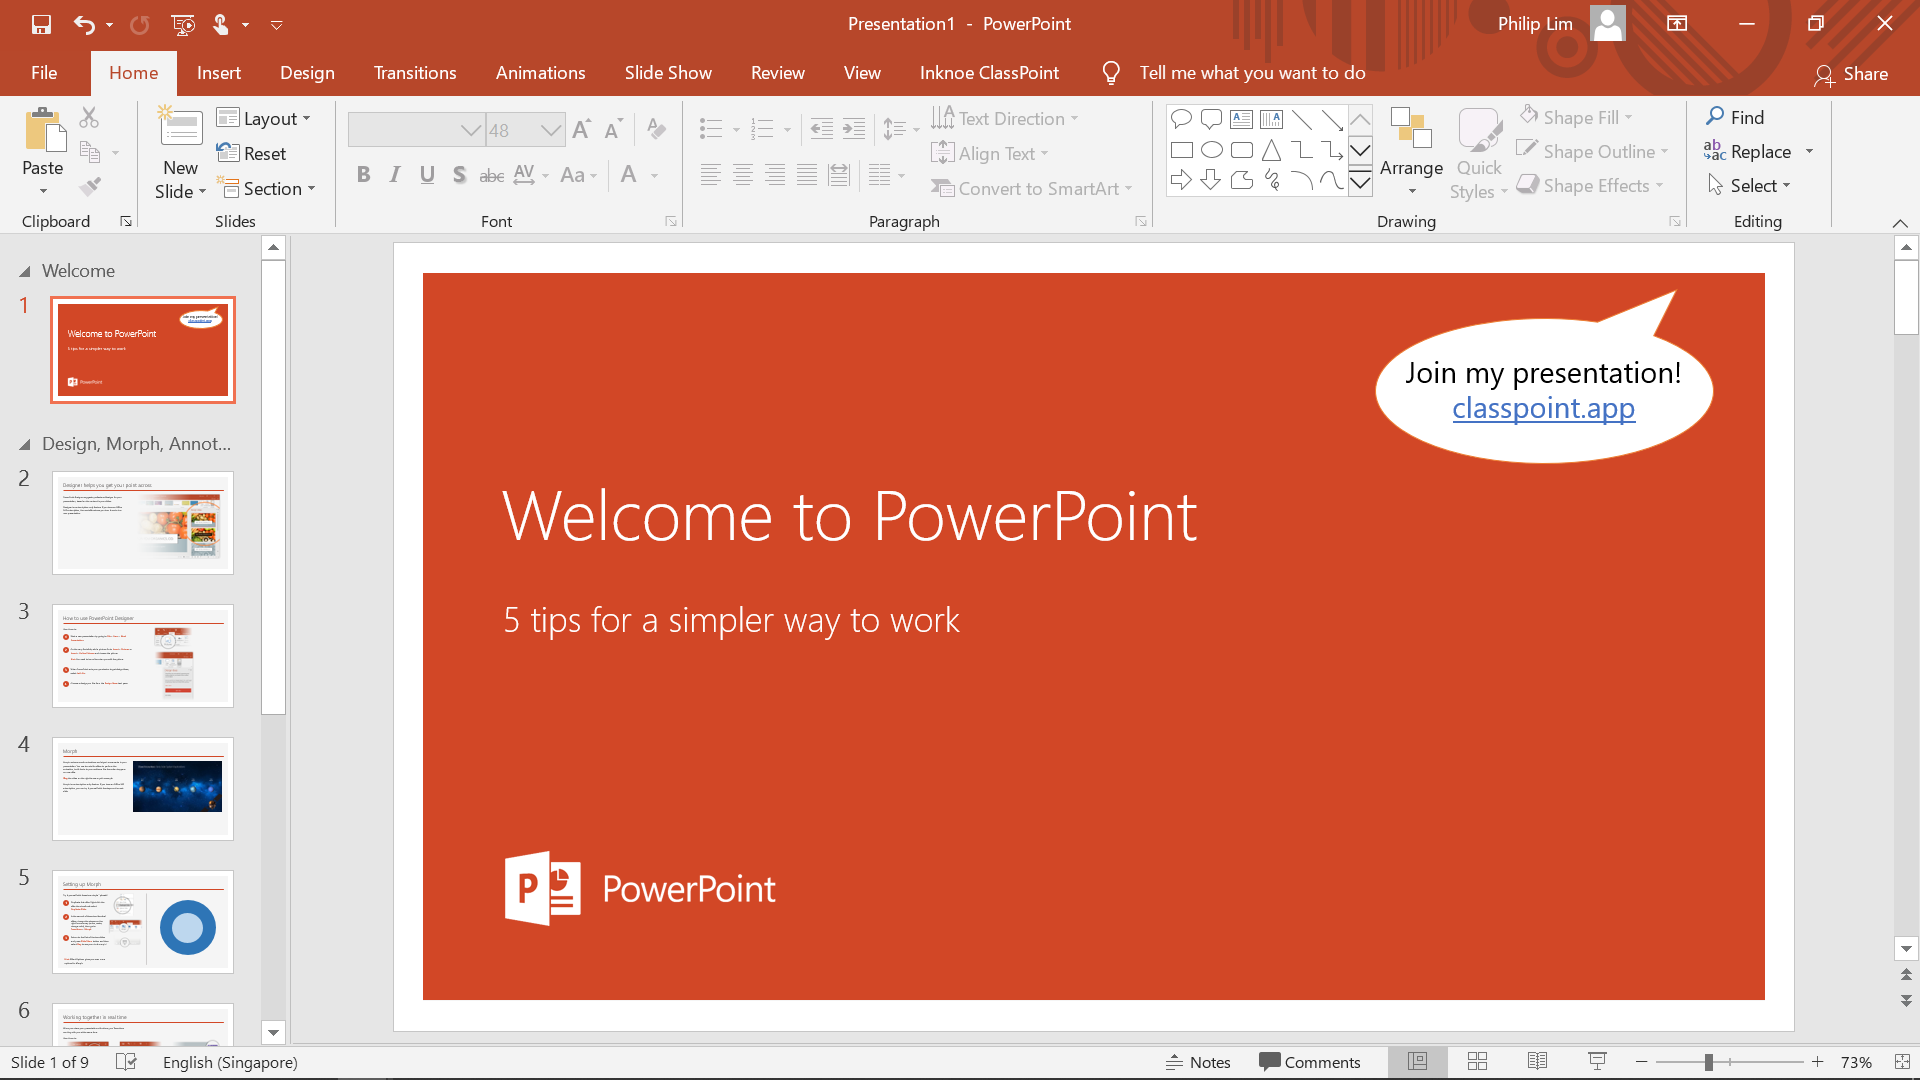 Tangkapan layar PowerPoint dengan keterangan alat ClassPoint untuk bergabung dengan kelas lebih cepat